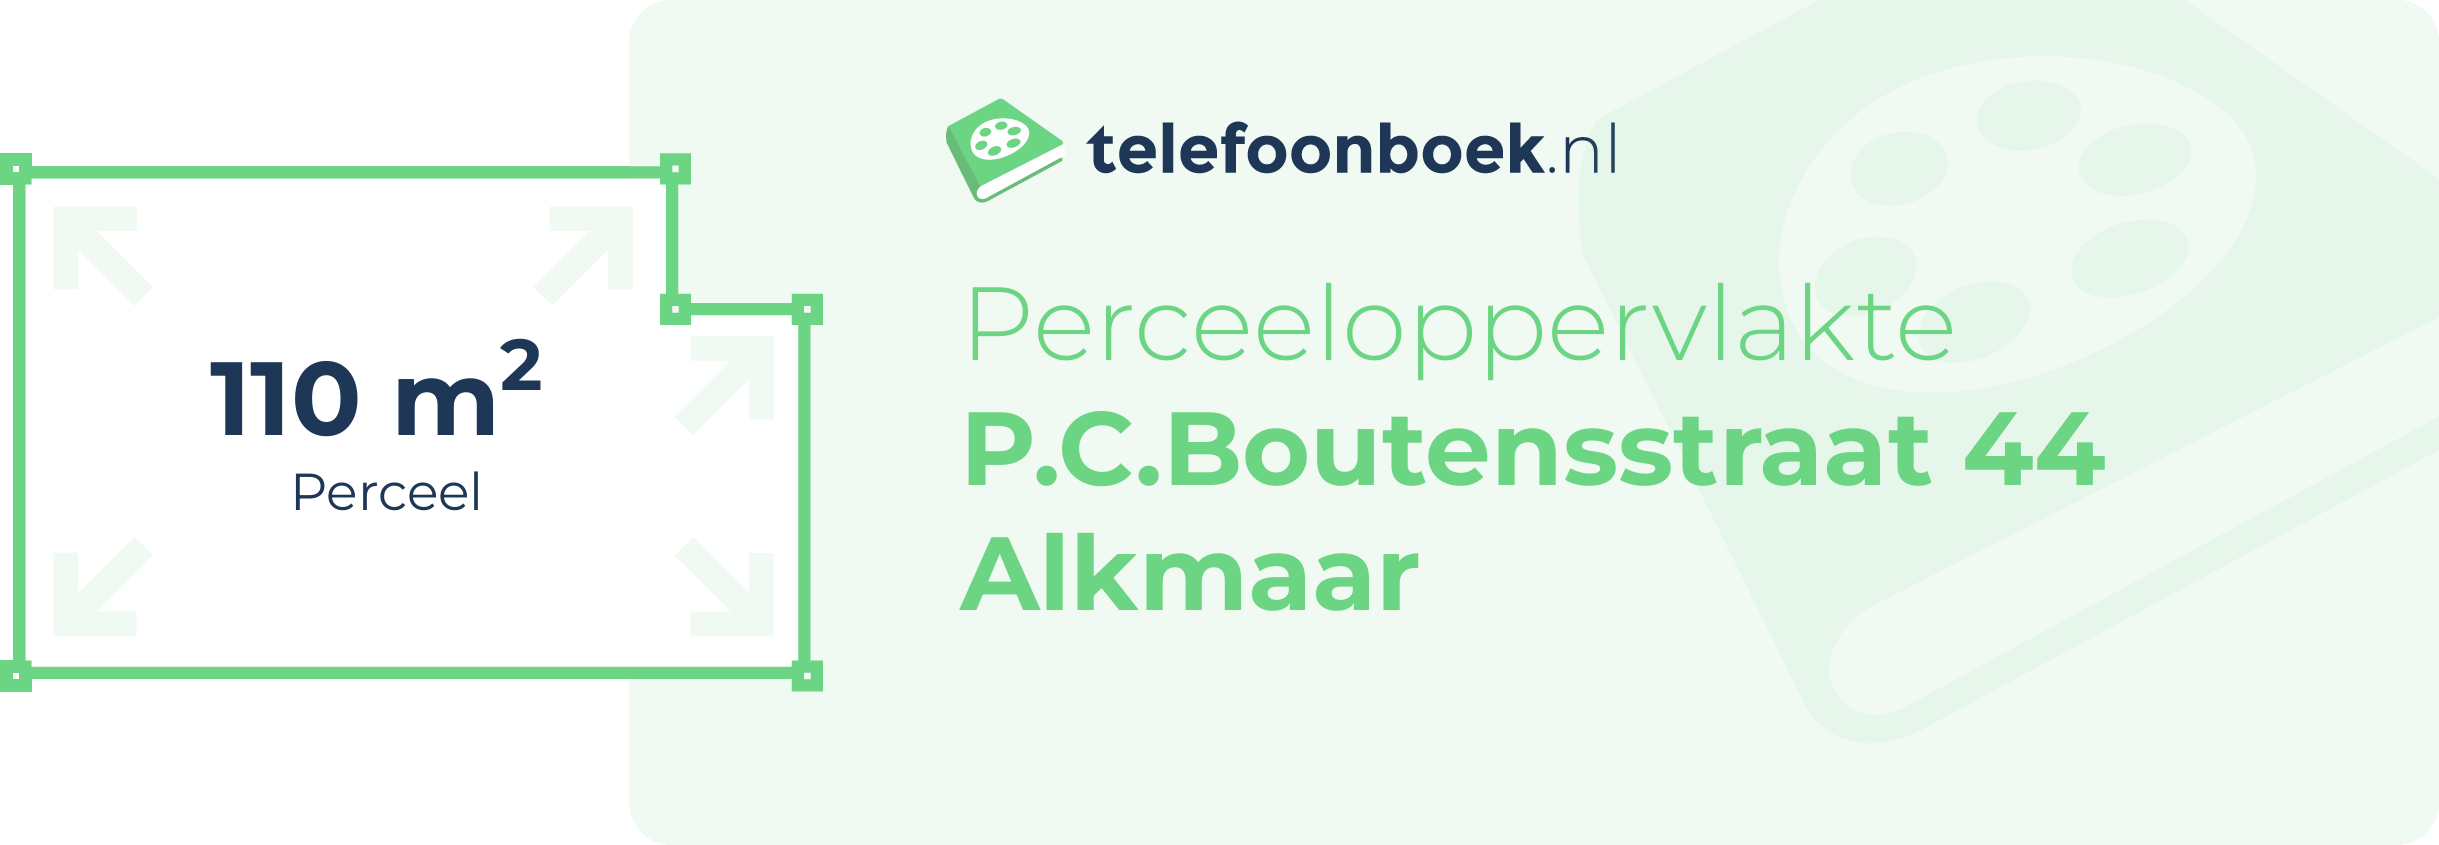 Perceeloppervlakte P.C.Boutensstraat 44 Alkmaar